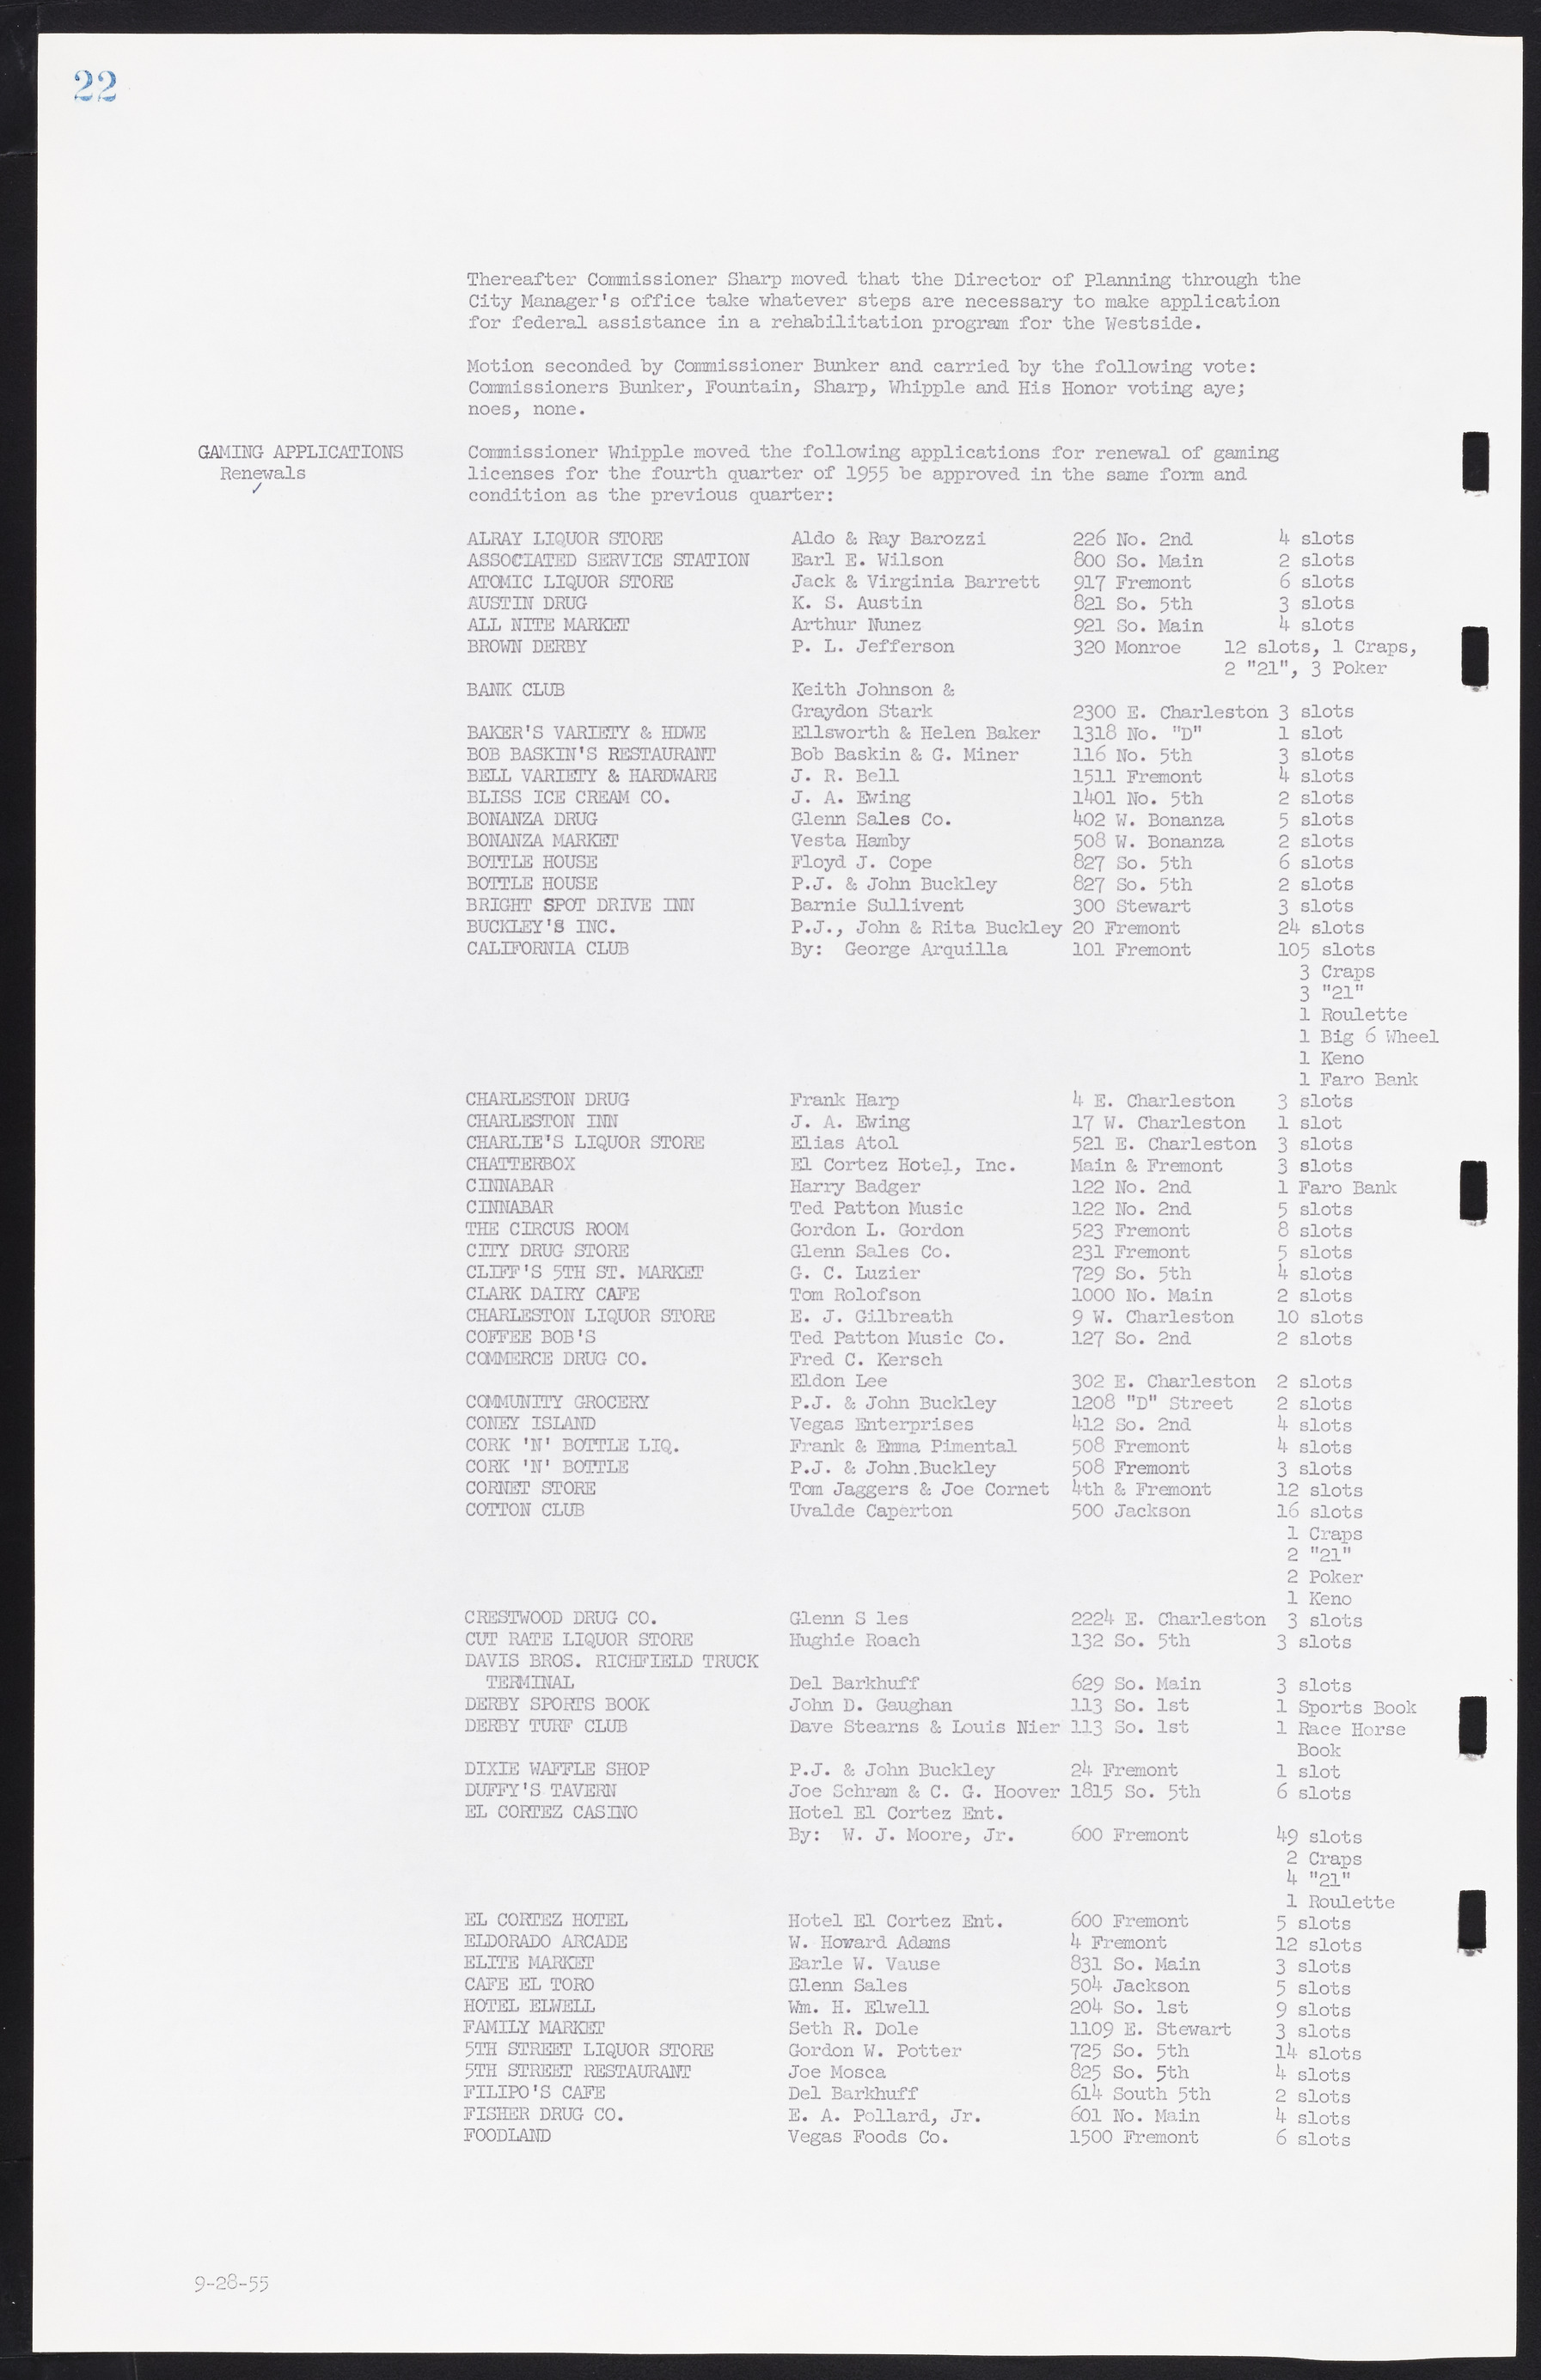 Las Vegas City Commission Minutes, September 21, 1955 to November 20, 1957, lvc000010-28